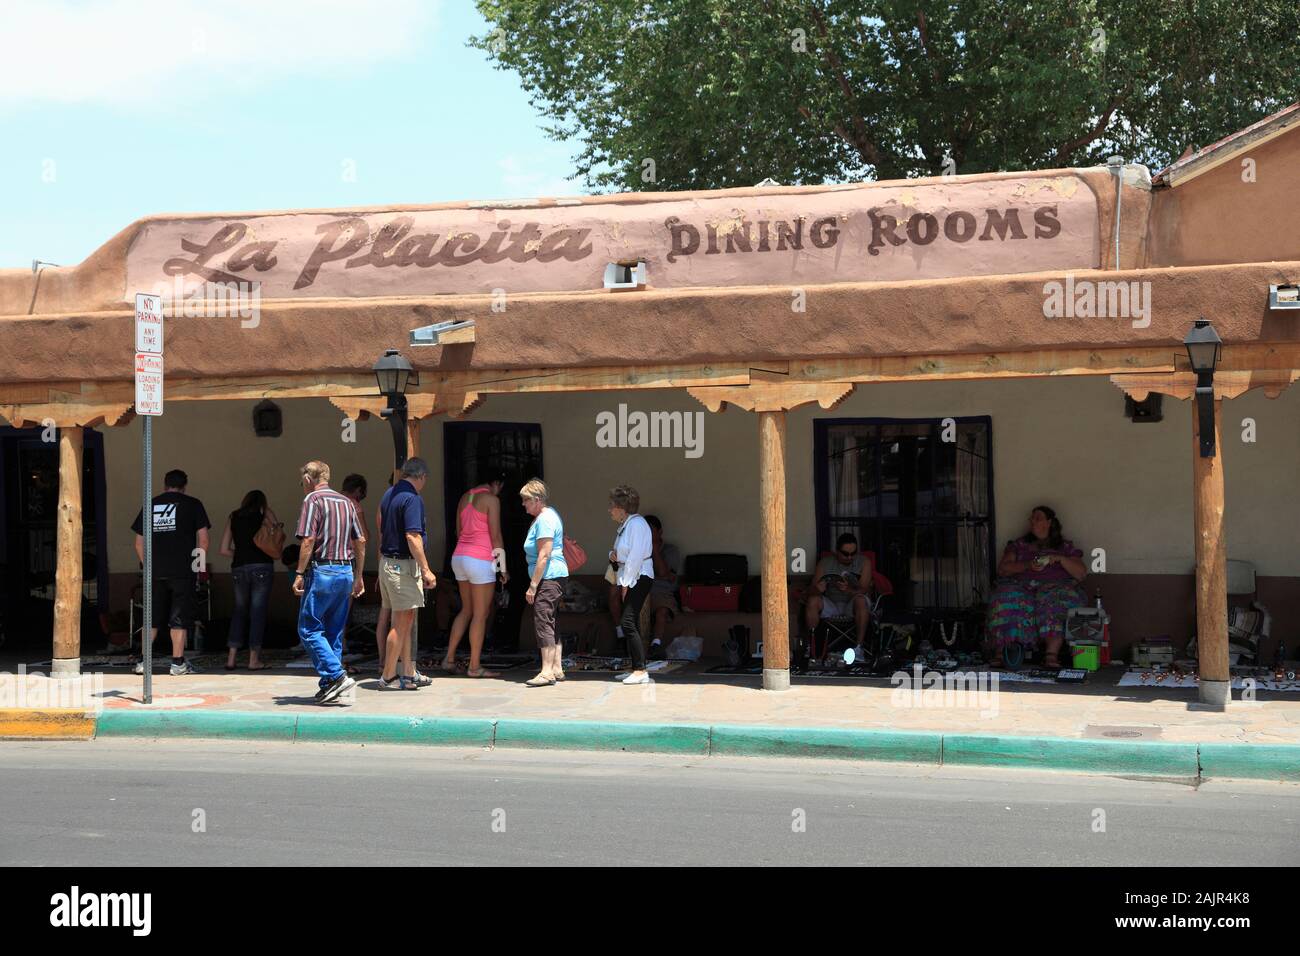 La Placita Dining Rooms, Plaza, Old Town, Albuquerque, New Mexico, USA Stock Photo